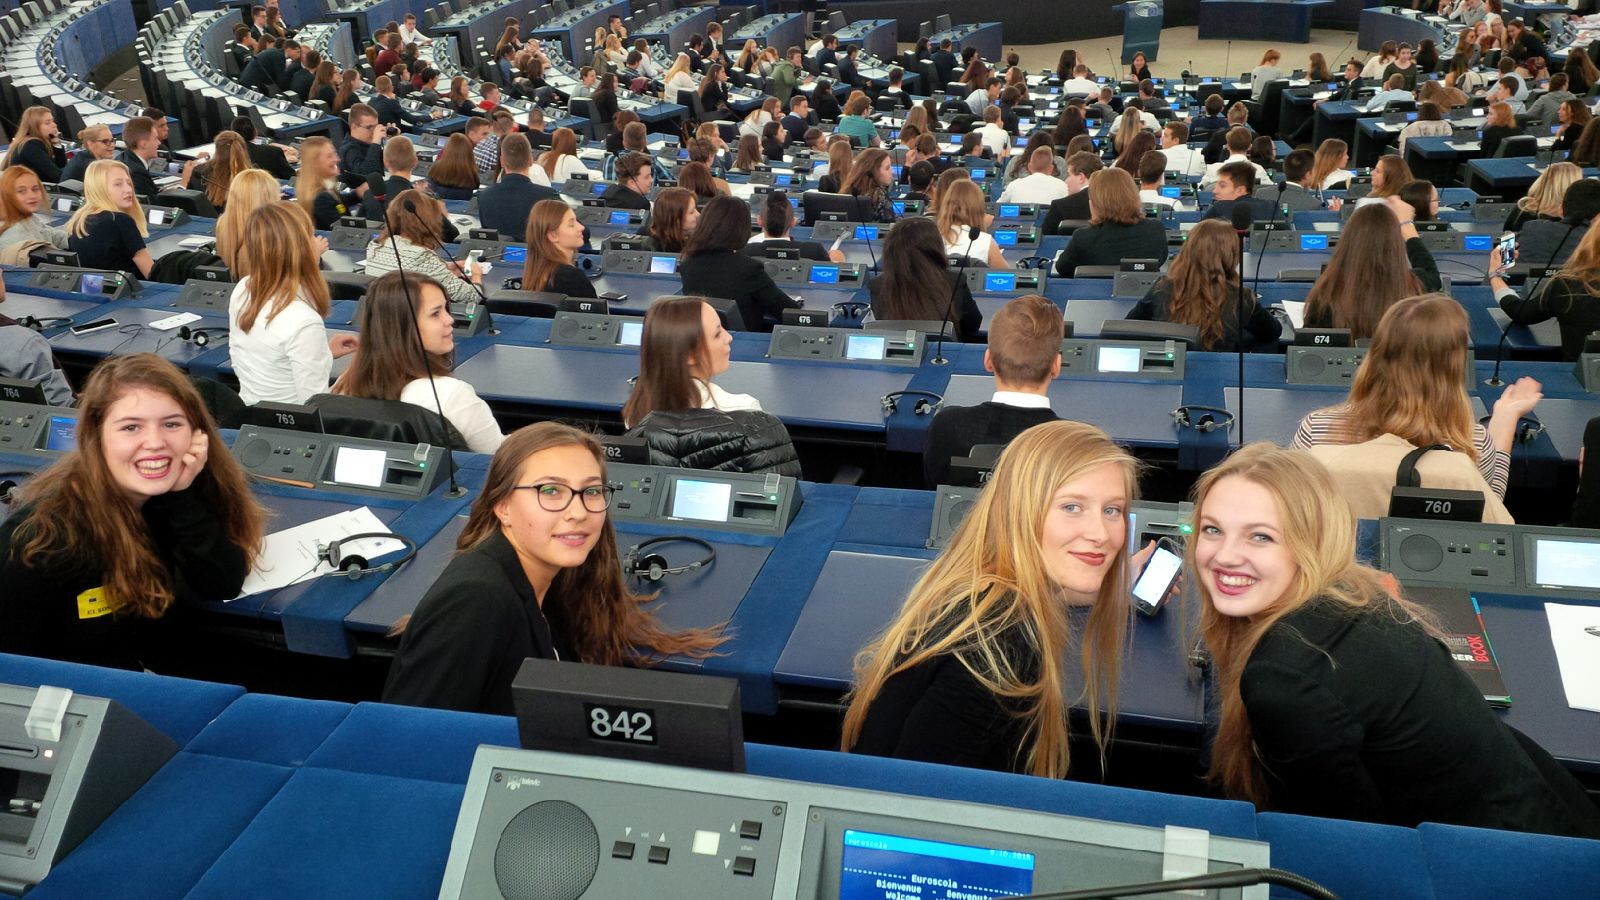 Oι 24 μαθητές που θα εκπροσωπήσουν τη Θεσσαλία στο πρόγραμμα EUROSCOLA